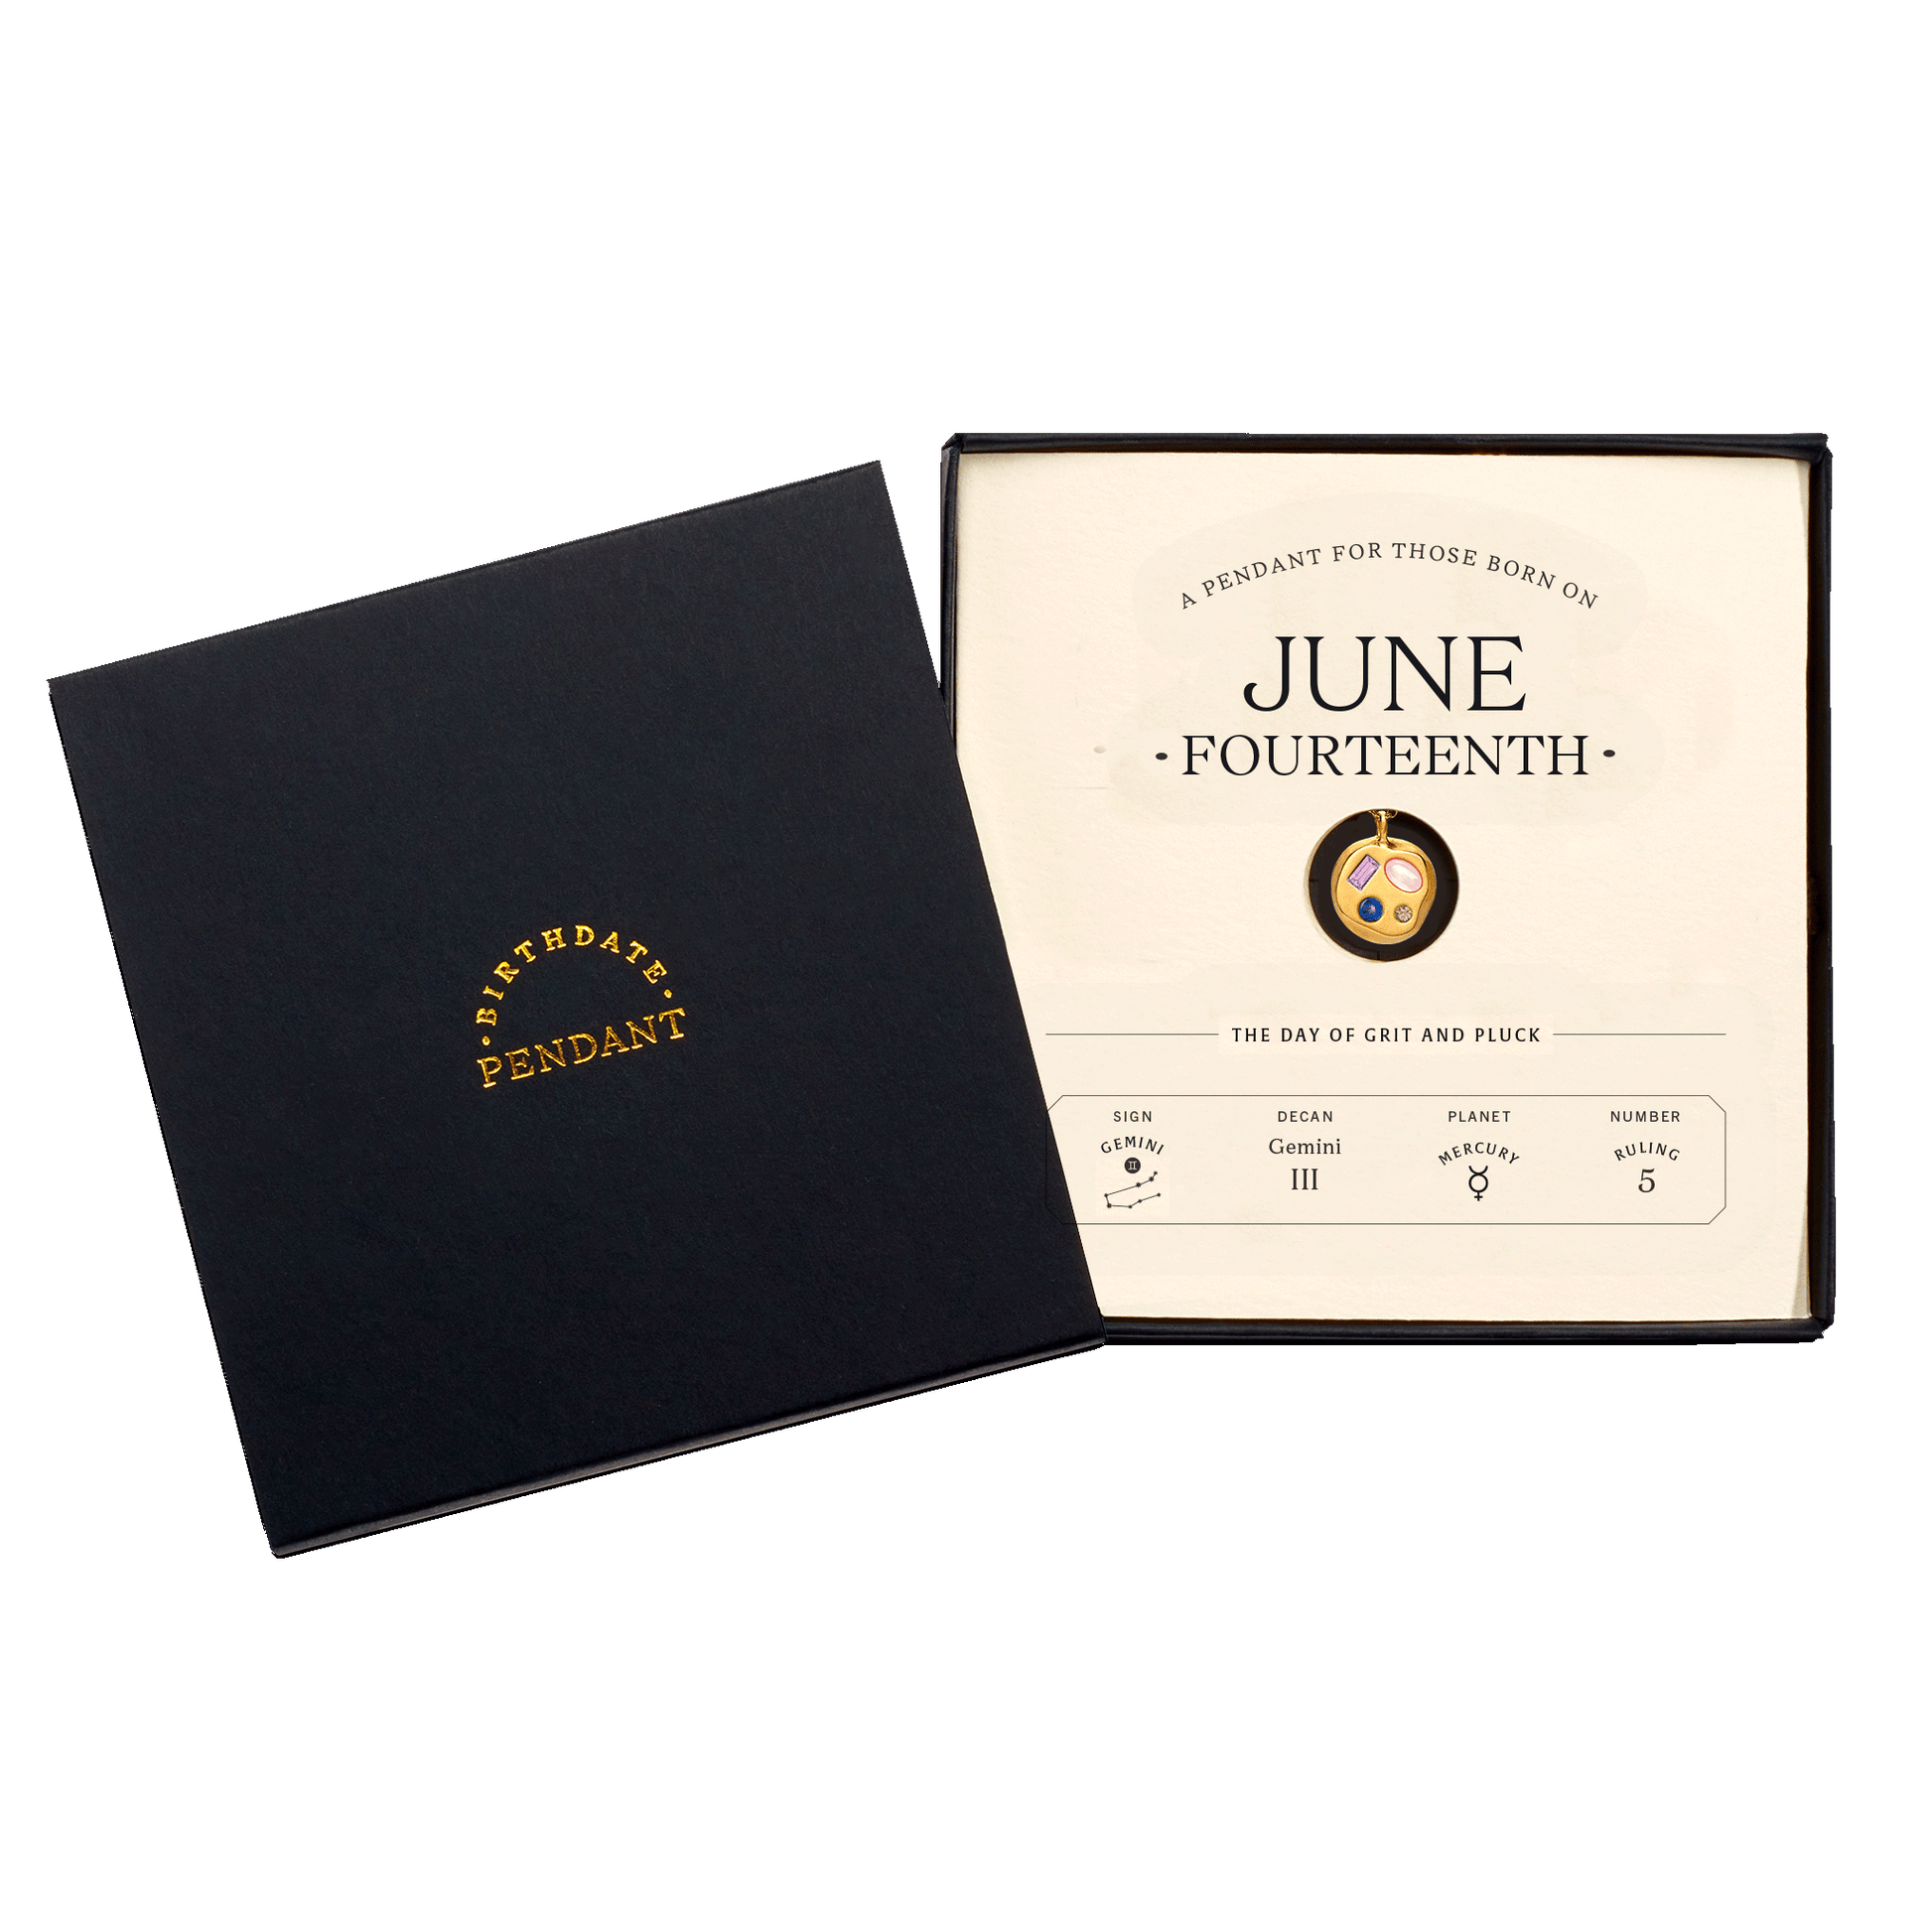 The June Fourteenth Pendant inside its box